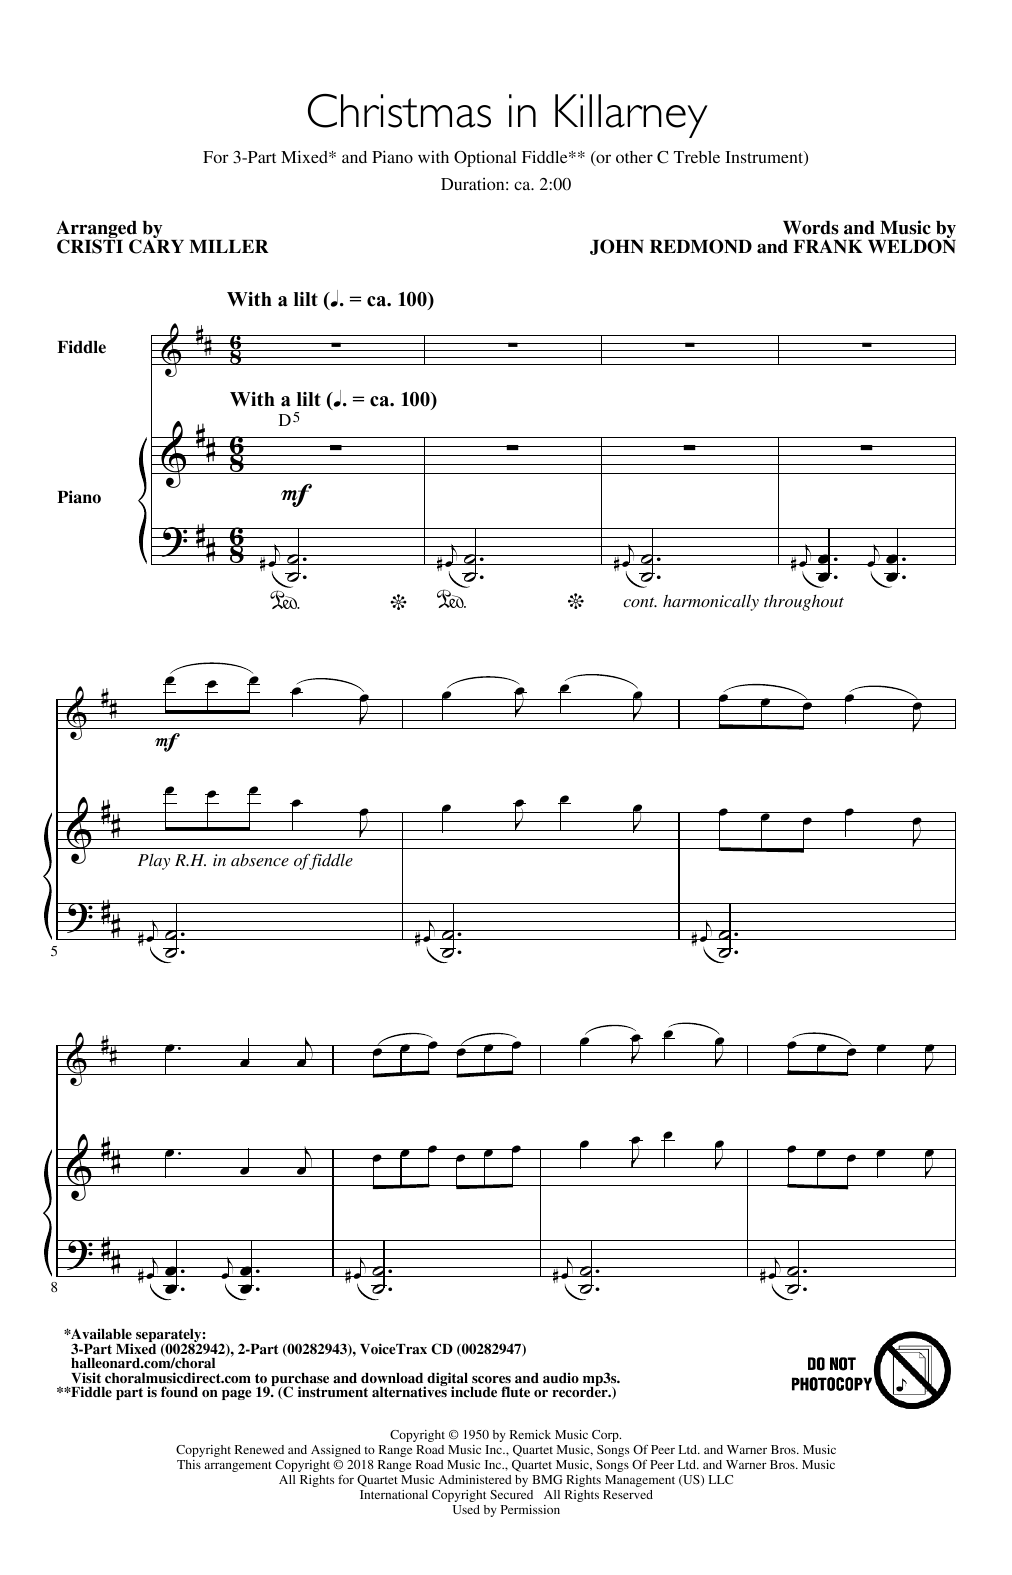 John Redmond & Frank Weldon Christmas In Killarney (arr. Cristi Cary Miller) Sheet Music Notes & Chords for 3-Part Mixed Choir - Download or Print PDF